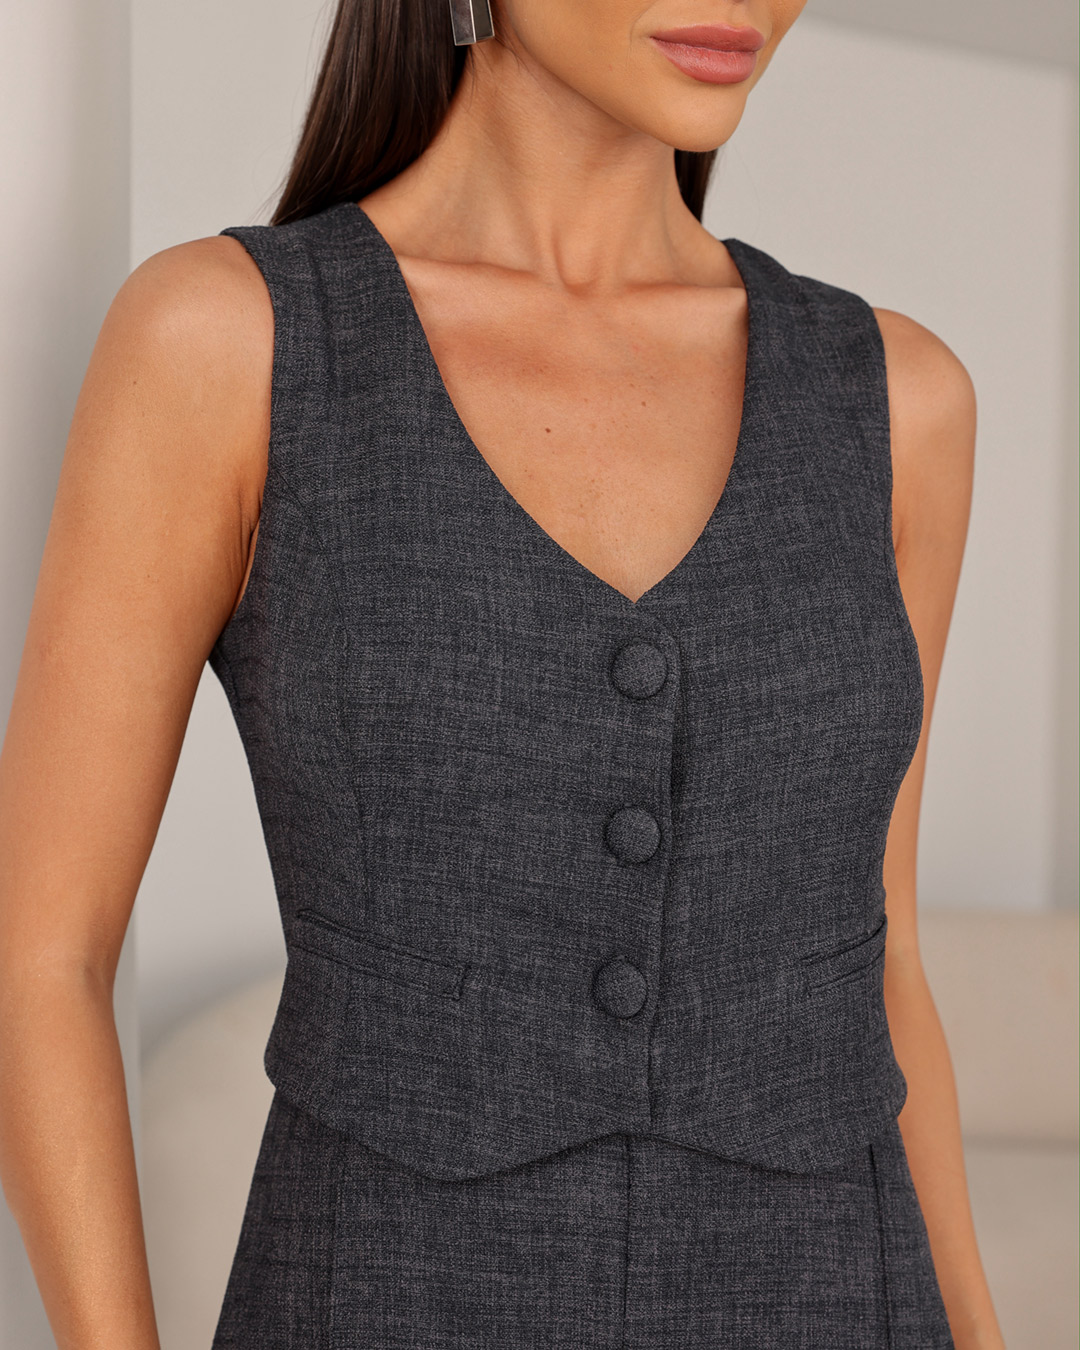 Dot Clothing - Jumpsuit Dot Clothing Vest Graphite - 2043CINZA